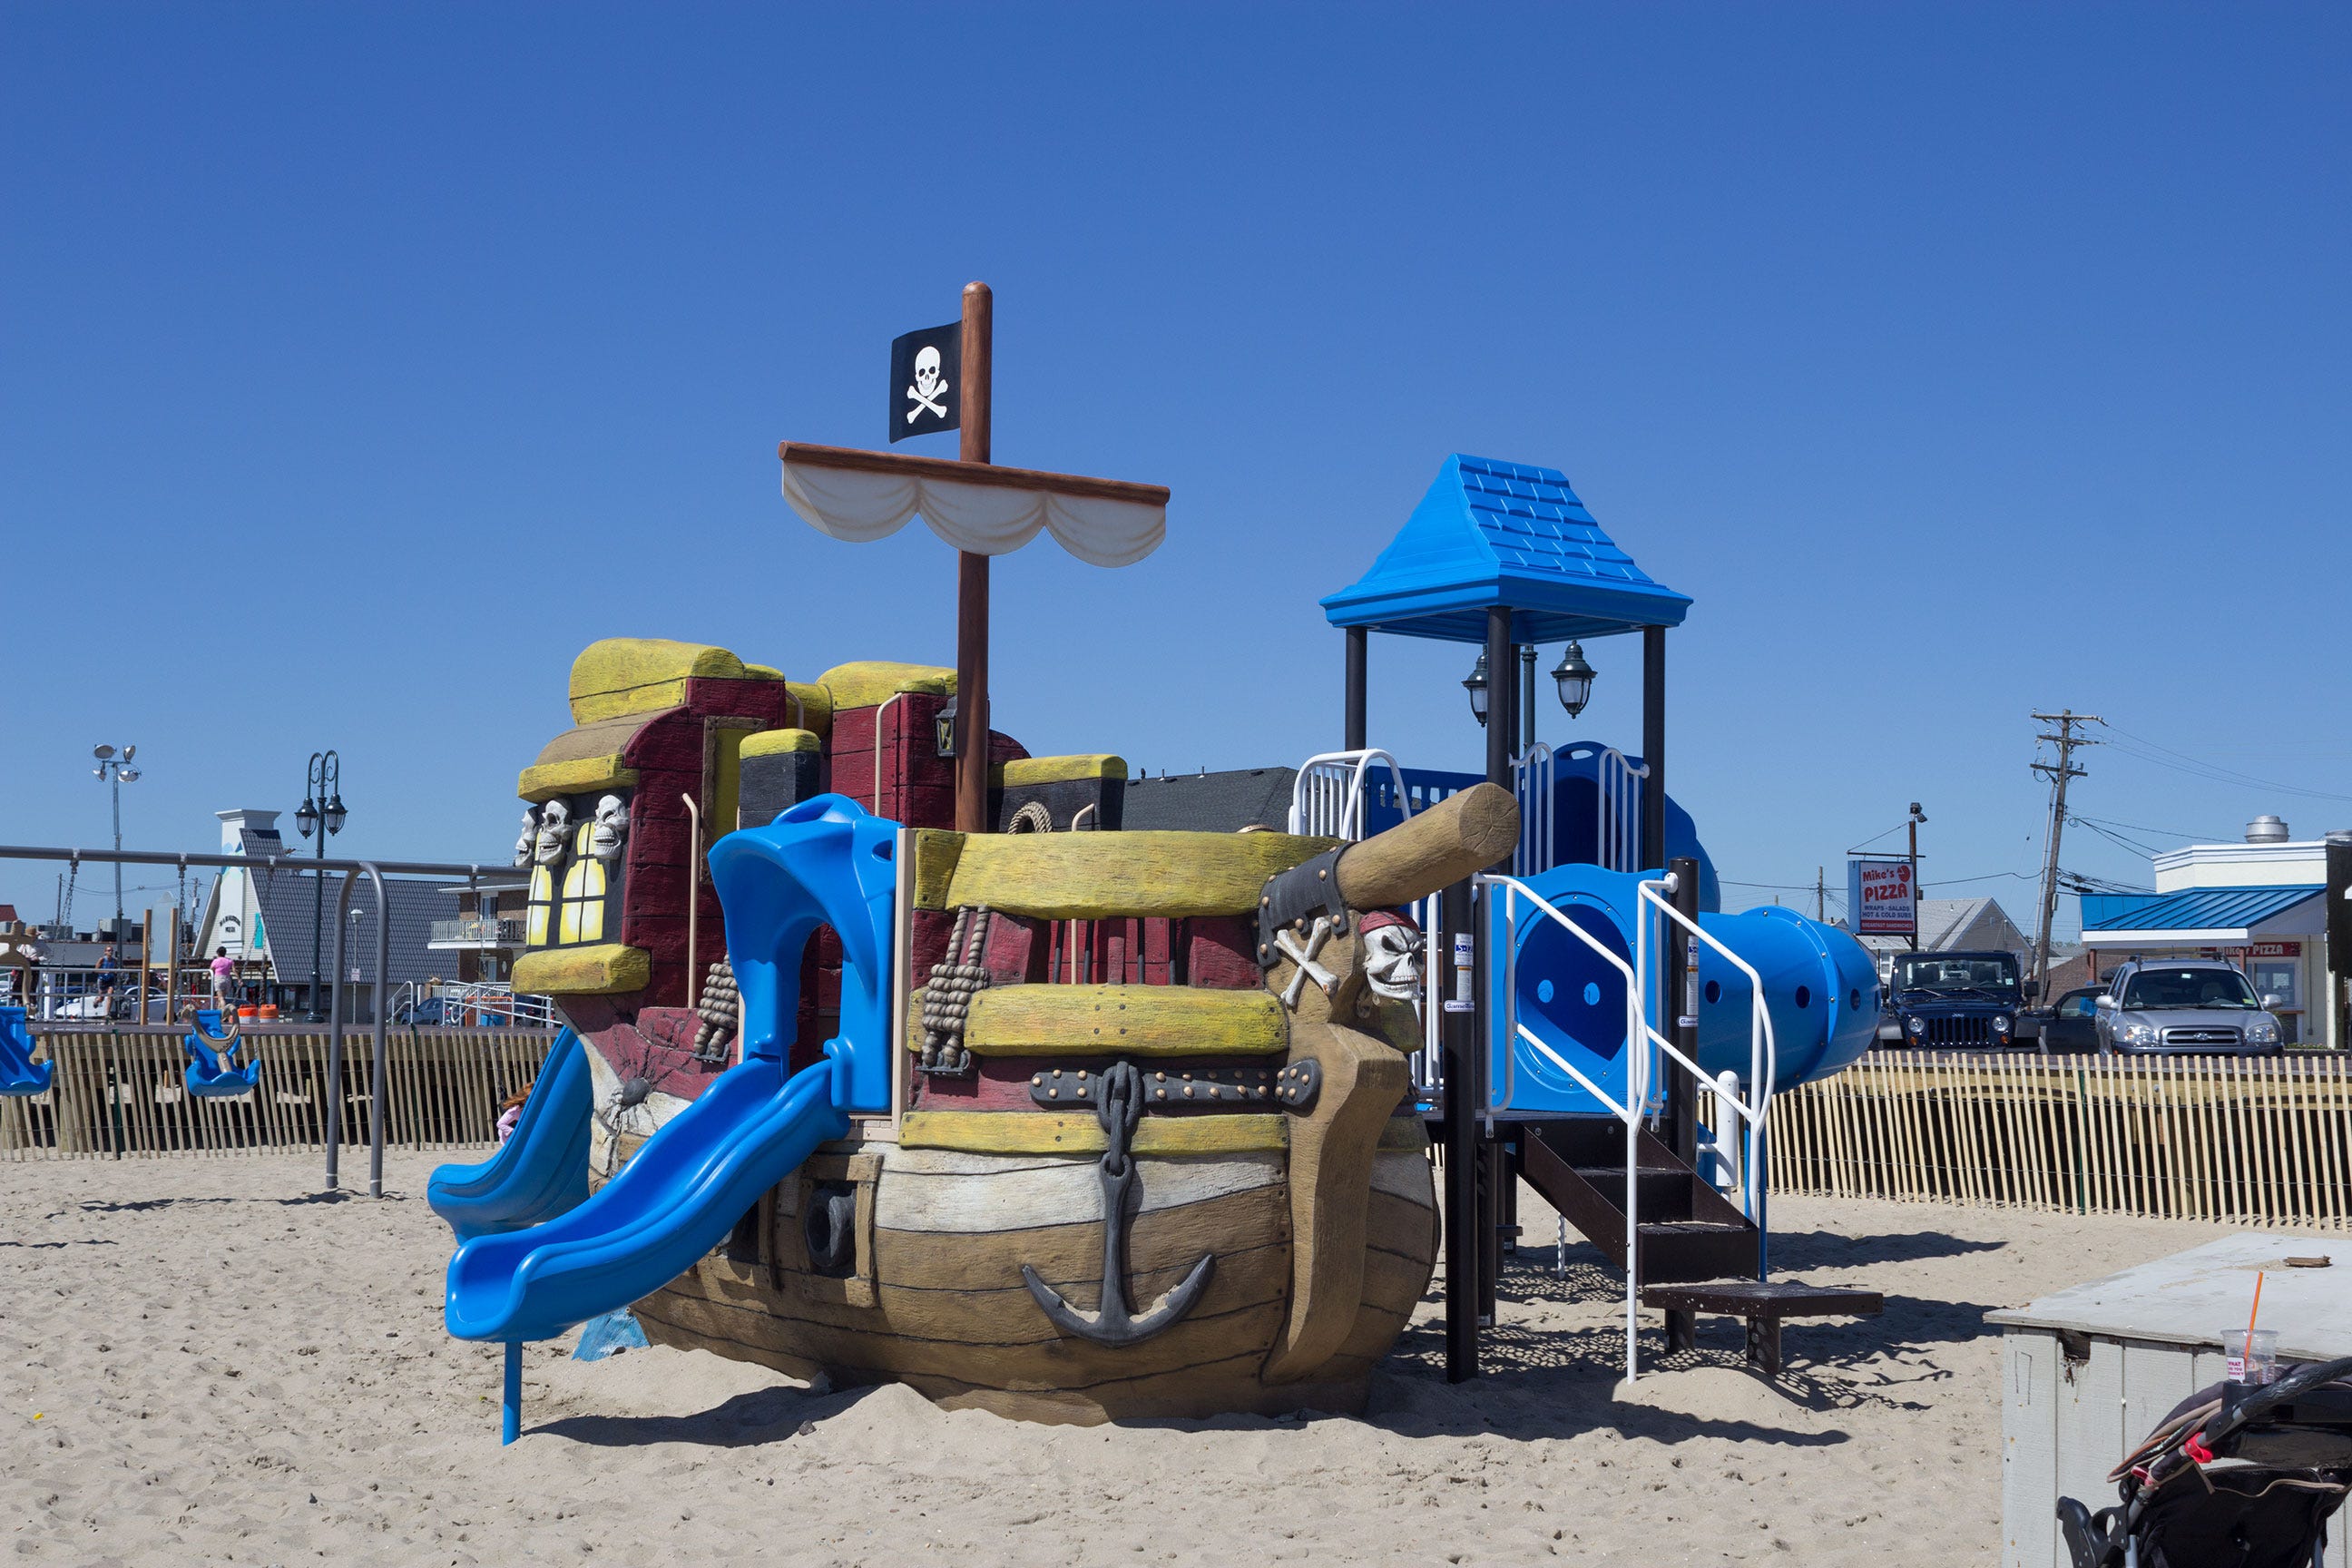 Belmar Beach Playground - Belmar Beach, NJ